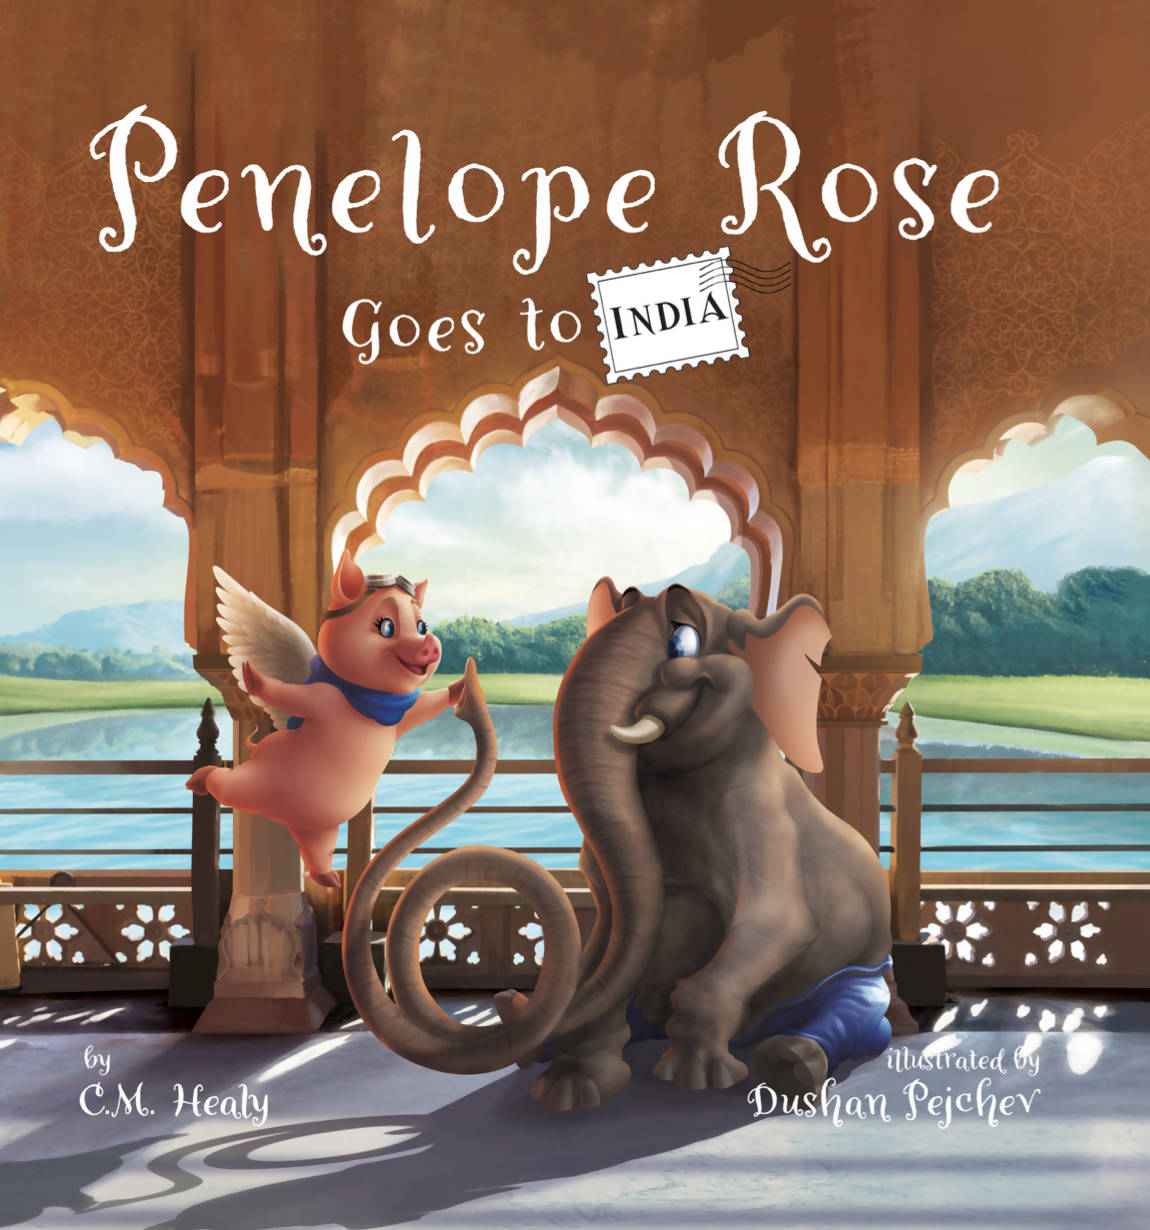 Penelope Rose Goes to India